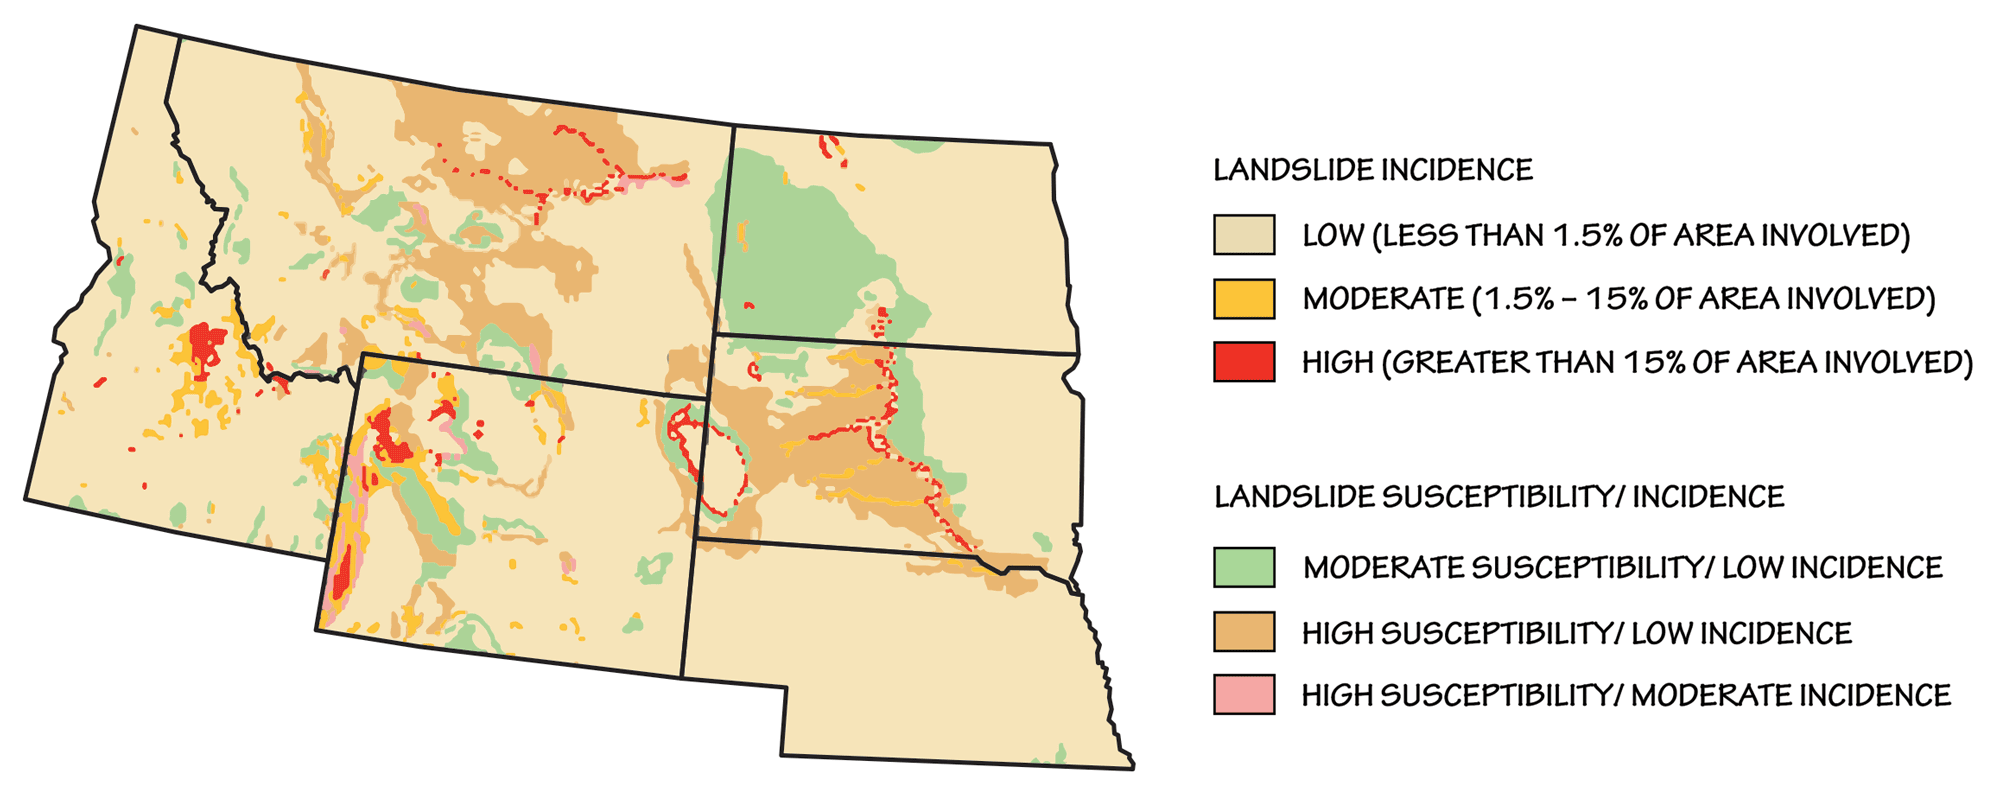 Map of the Northwest Central United States showing landslide incidence and associated risk levels.